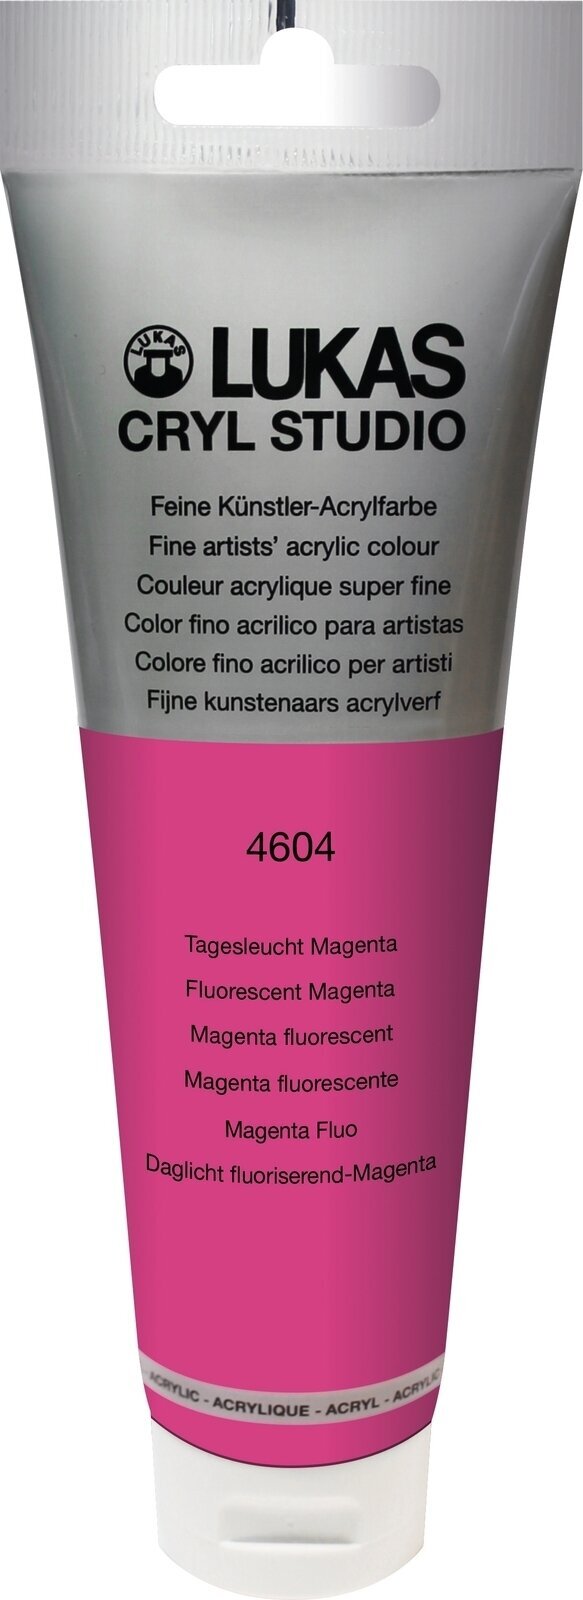 Akrylová barva Lukas Cryl Studio Acrylic Paint Plastic Tube Akrylová barva Fluorescent Magenta 125 ml 1 ks